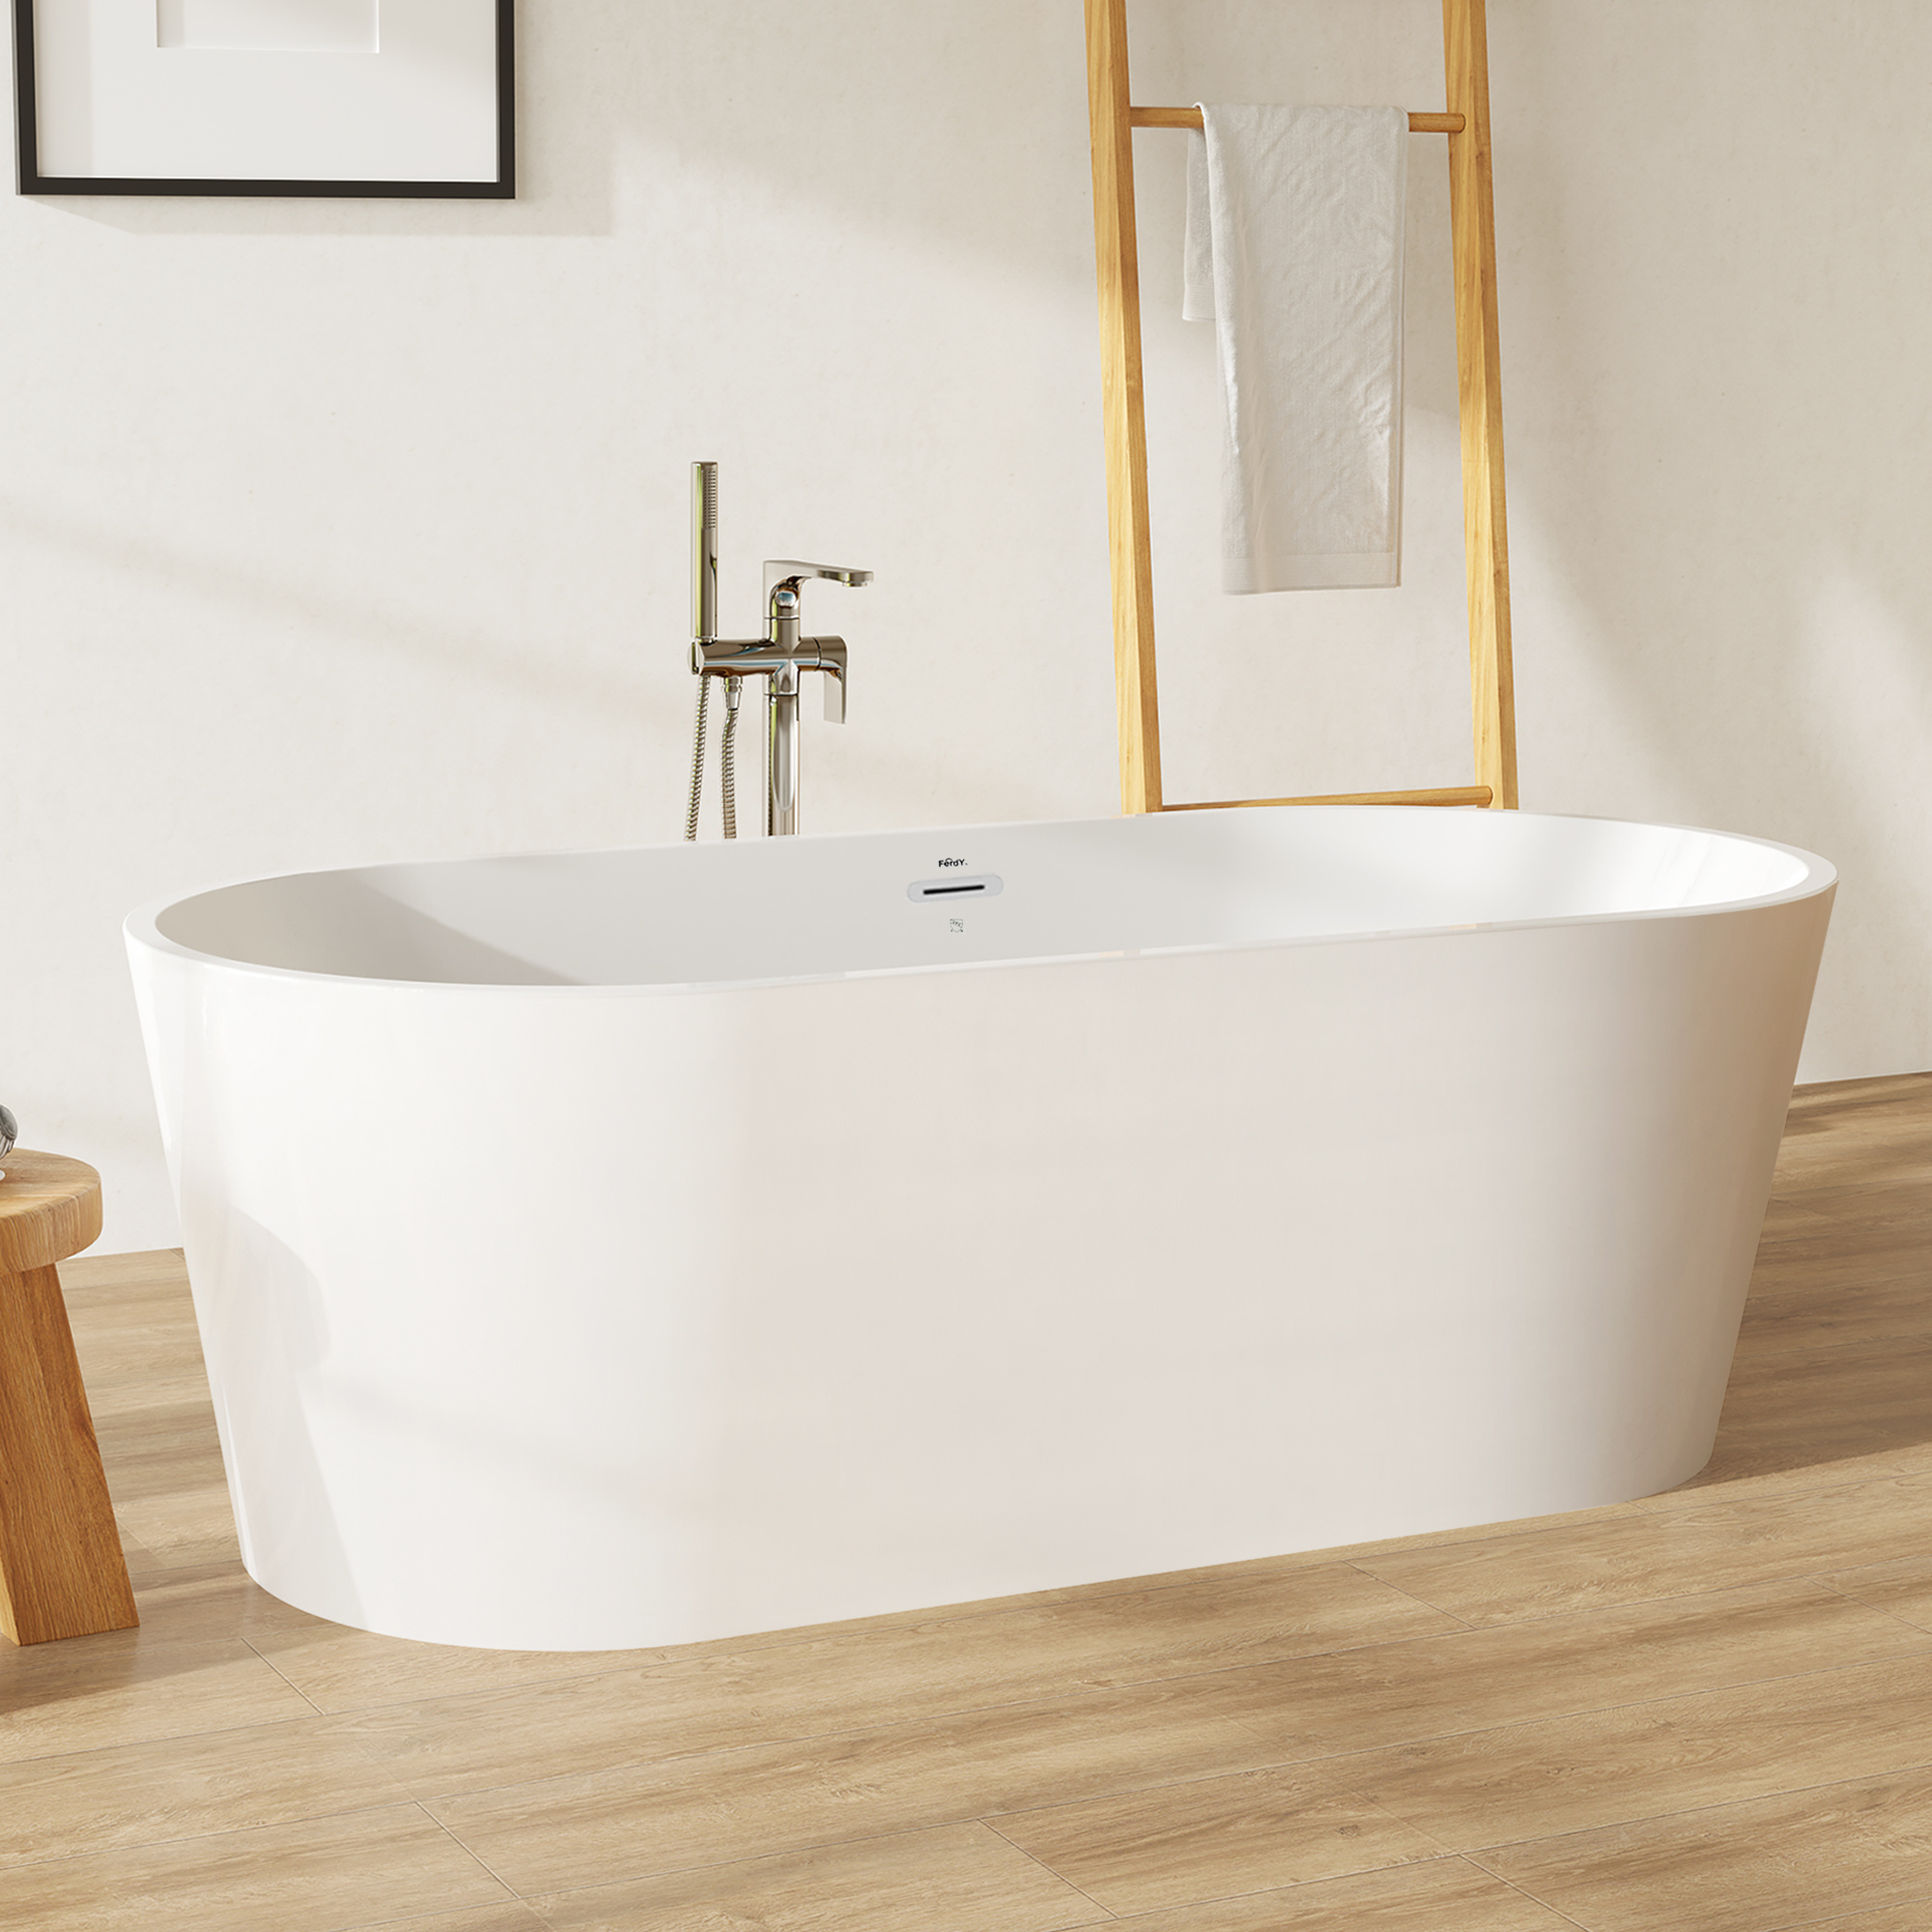 66 inch Acrylic Freestanding Bathtub, Small Classic Oval Shape Acrylic Soaking Bathtub with Brushed Nickel Drain & Minimalist Linear Design Overflow, Modern White-CASAINC